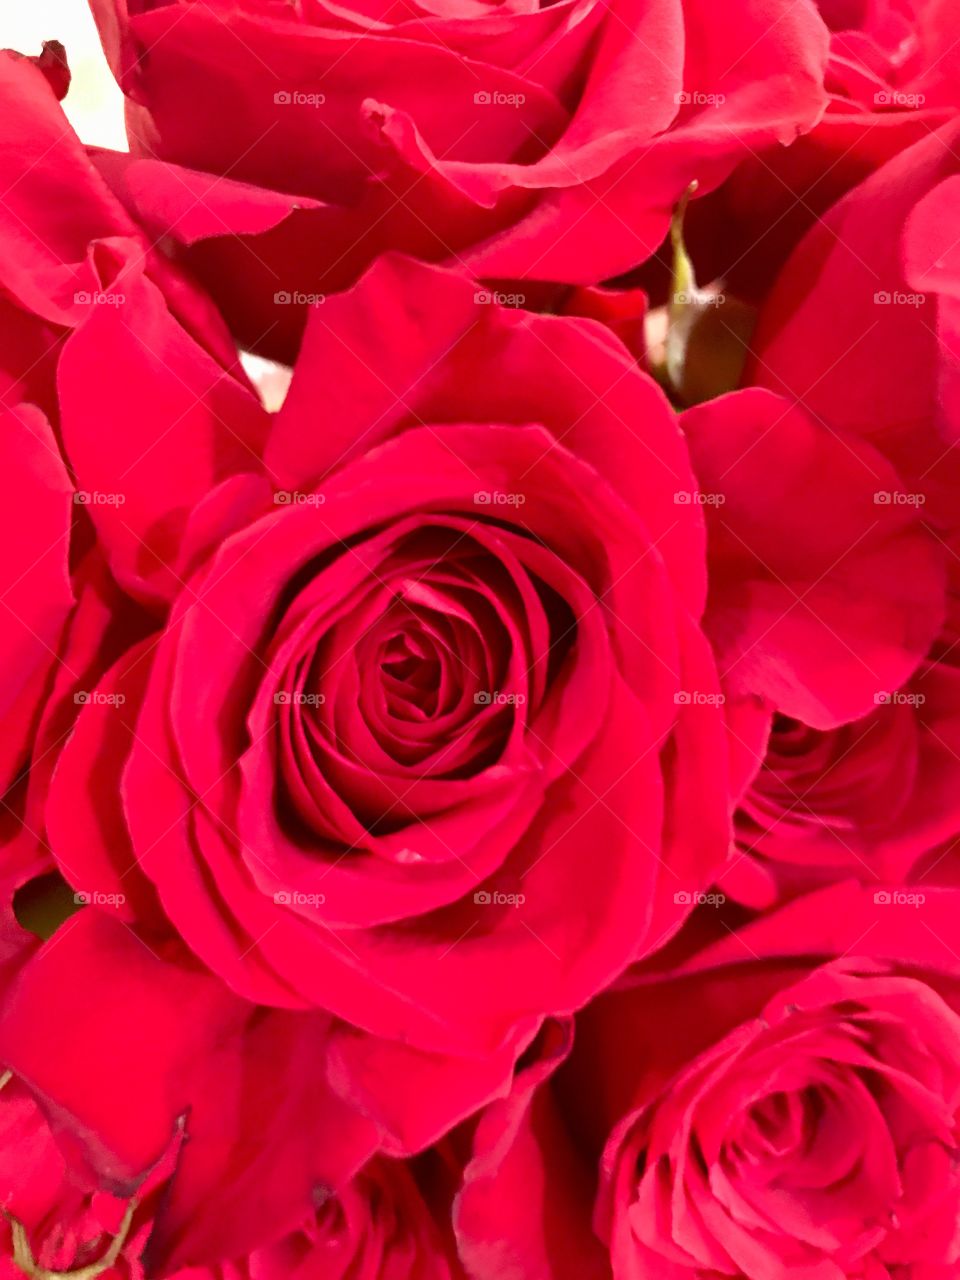 Rose, Petal, Flower, Romance, Love